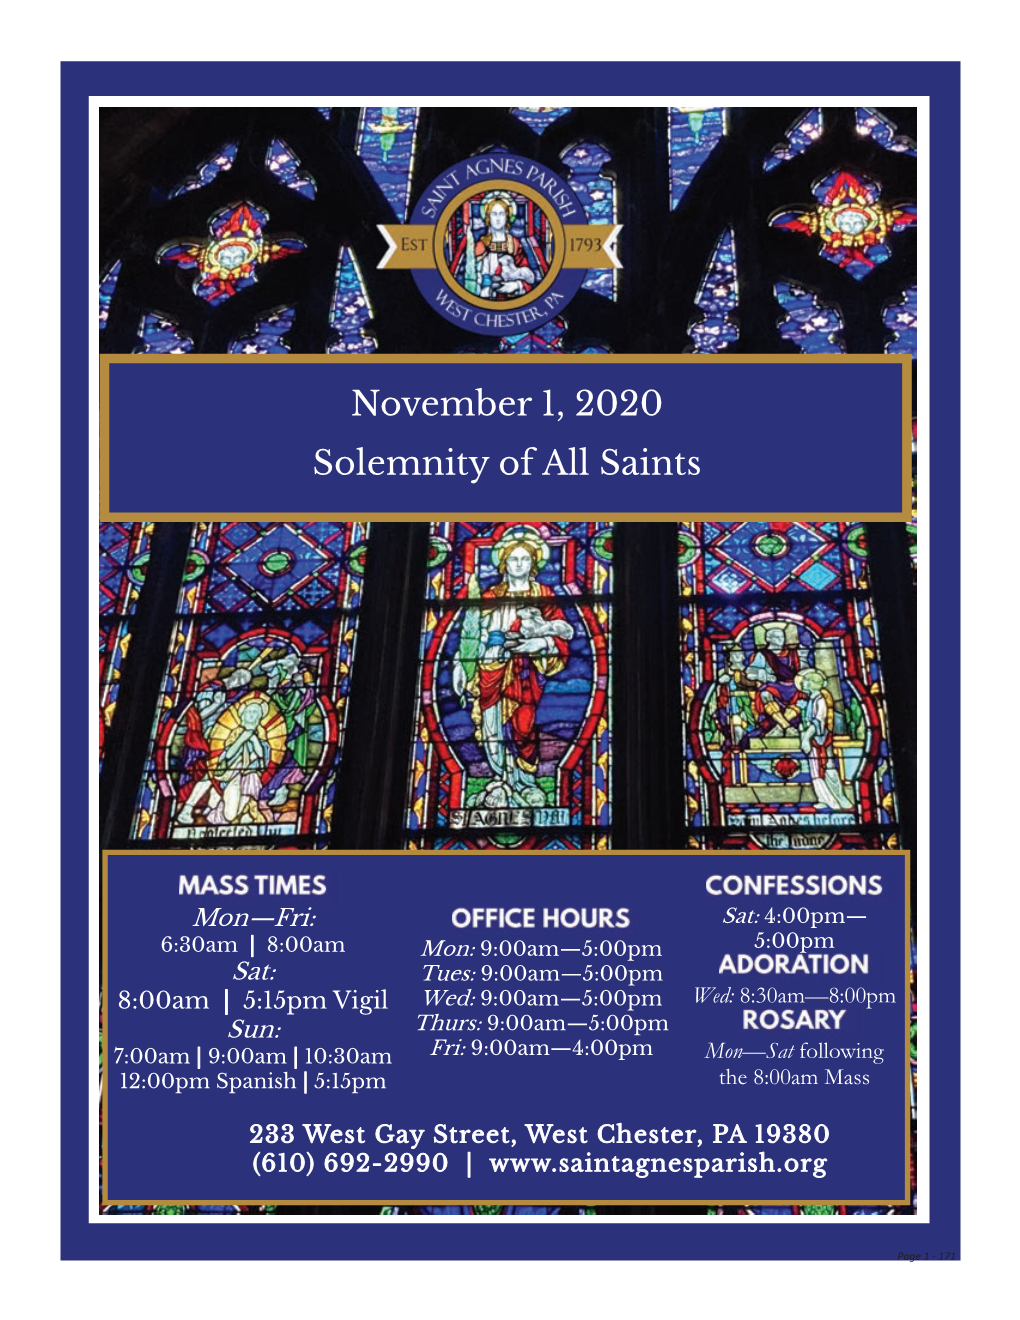 November 1, 2020 Solemnity of All Saints